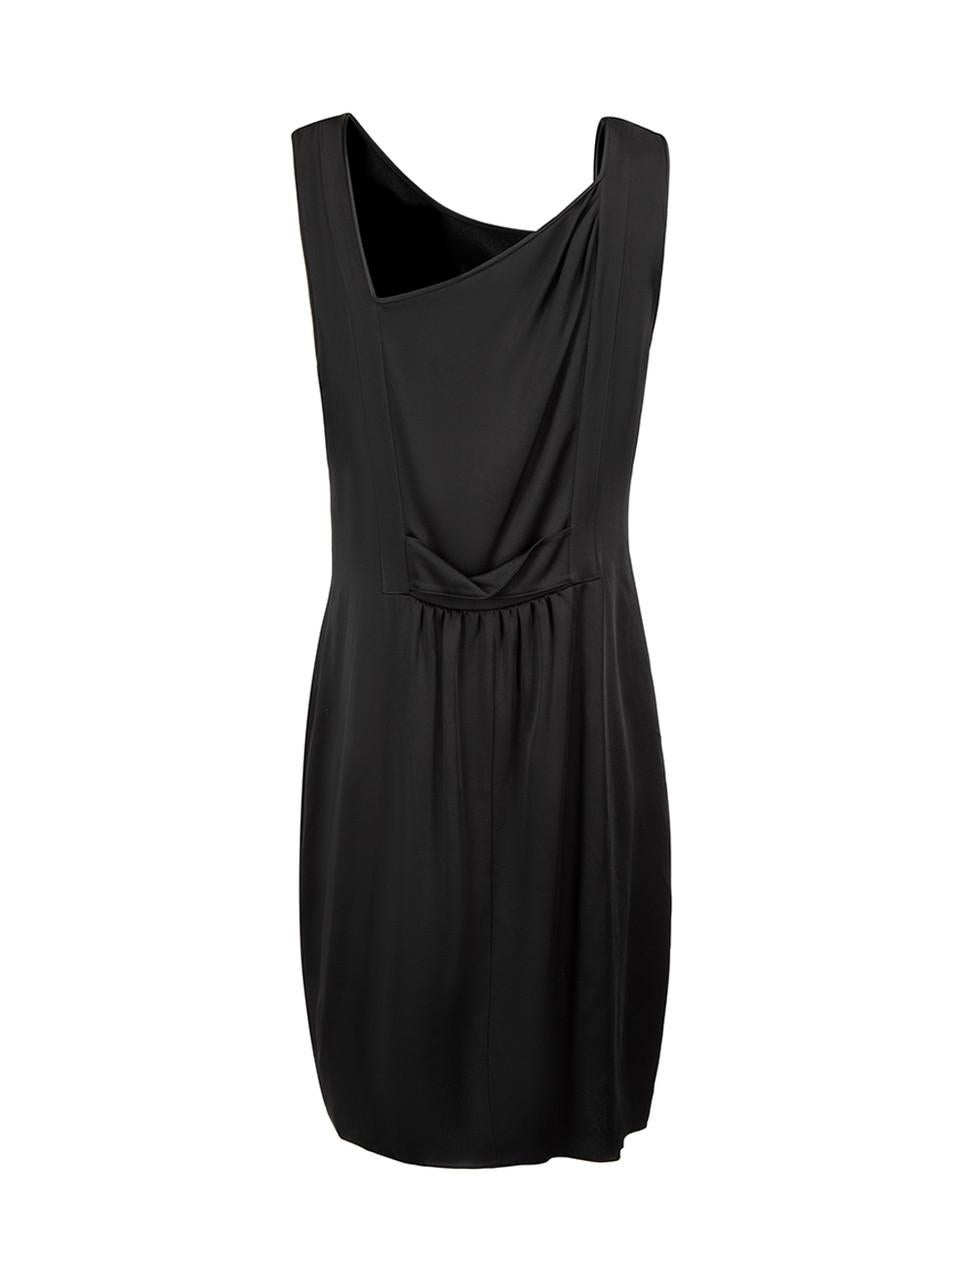 Black Asymmetrical Neck Mini Dress Size XXL In Good Condition For Sale In London, GB